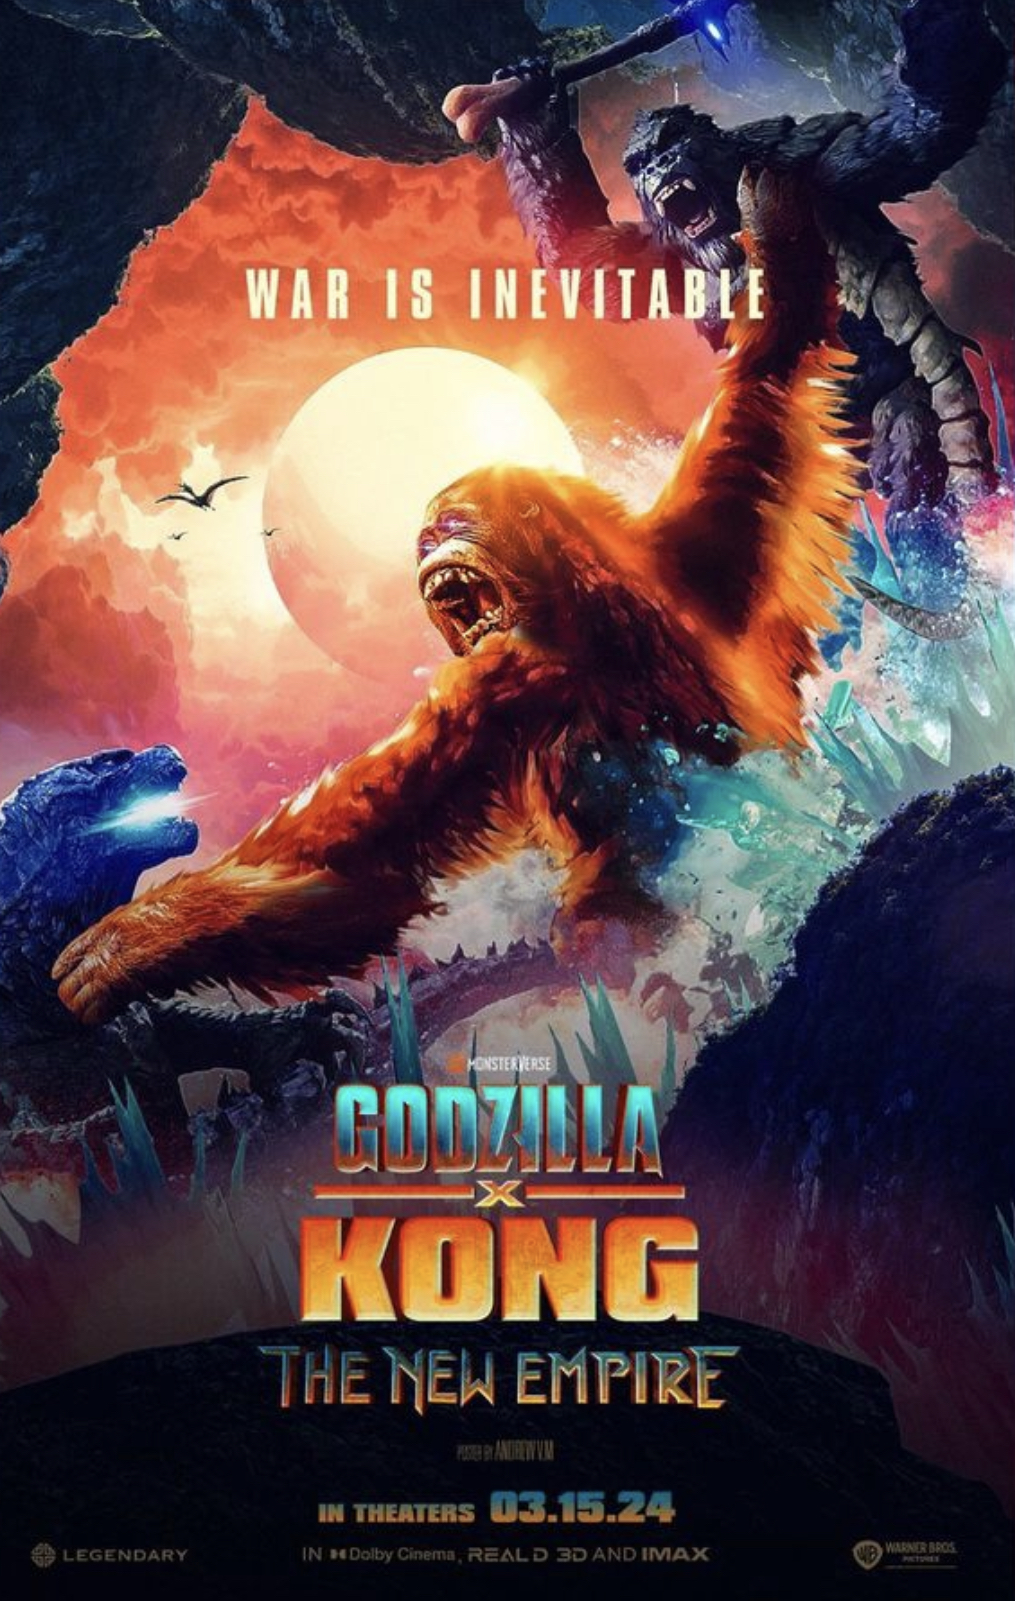 SNEAK PEEK "Godzilla x Kong The New Empire"